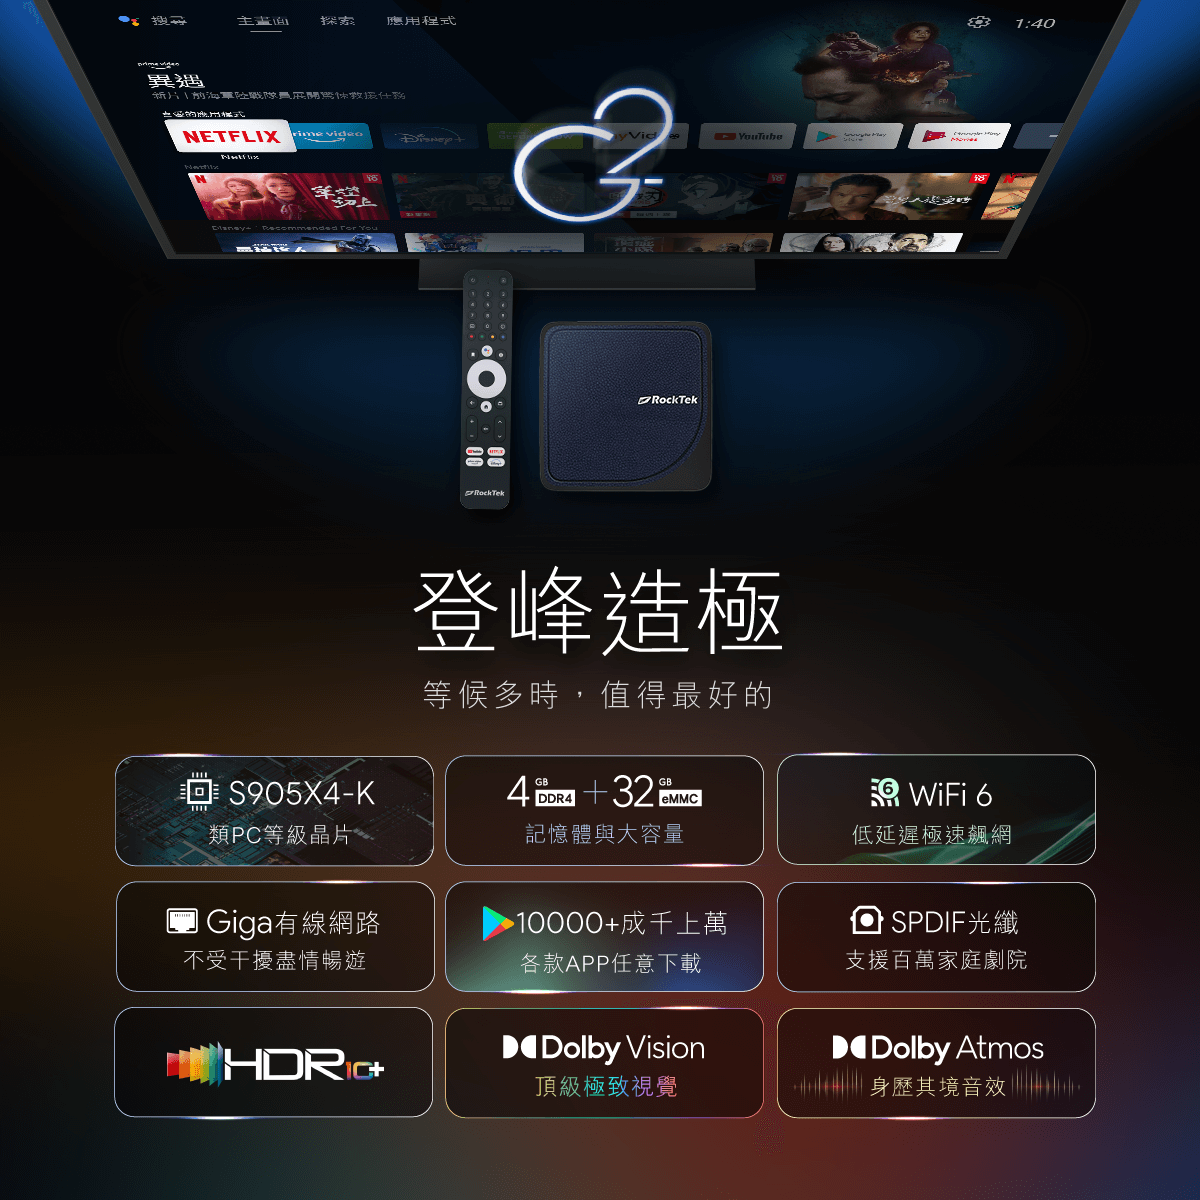 【Rocktek 雷爵】G2 4K影音串流遊戲主機 安卓電視盒 贈LiTV